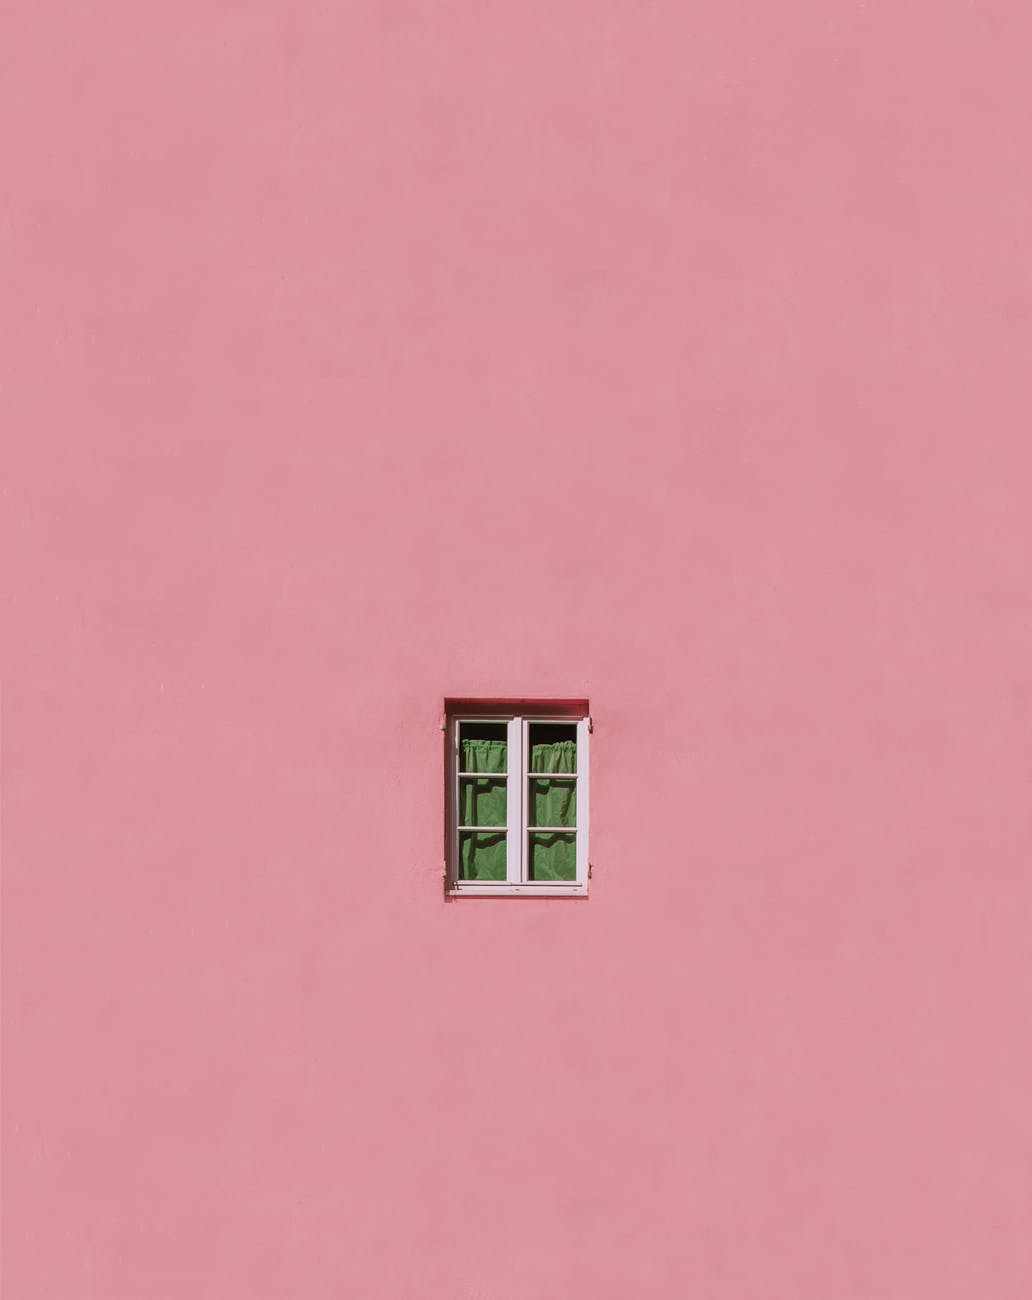 window on pink wall